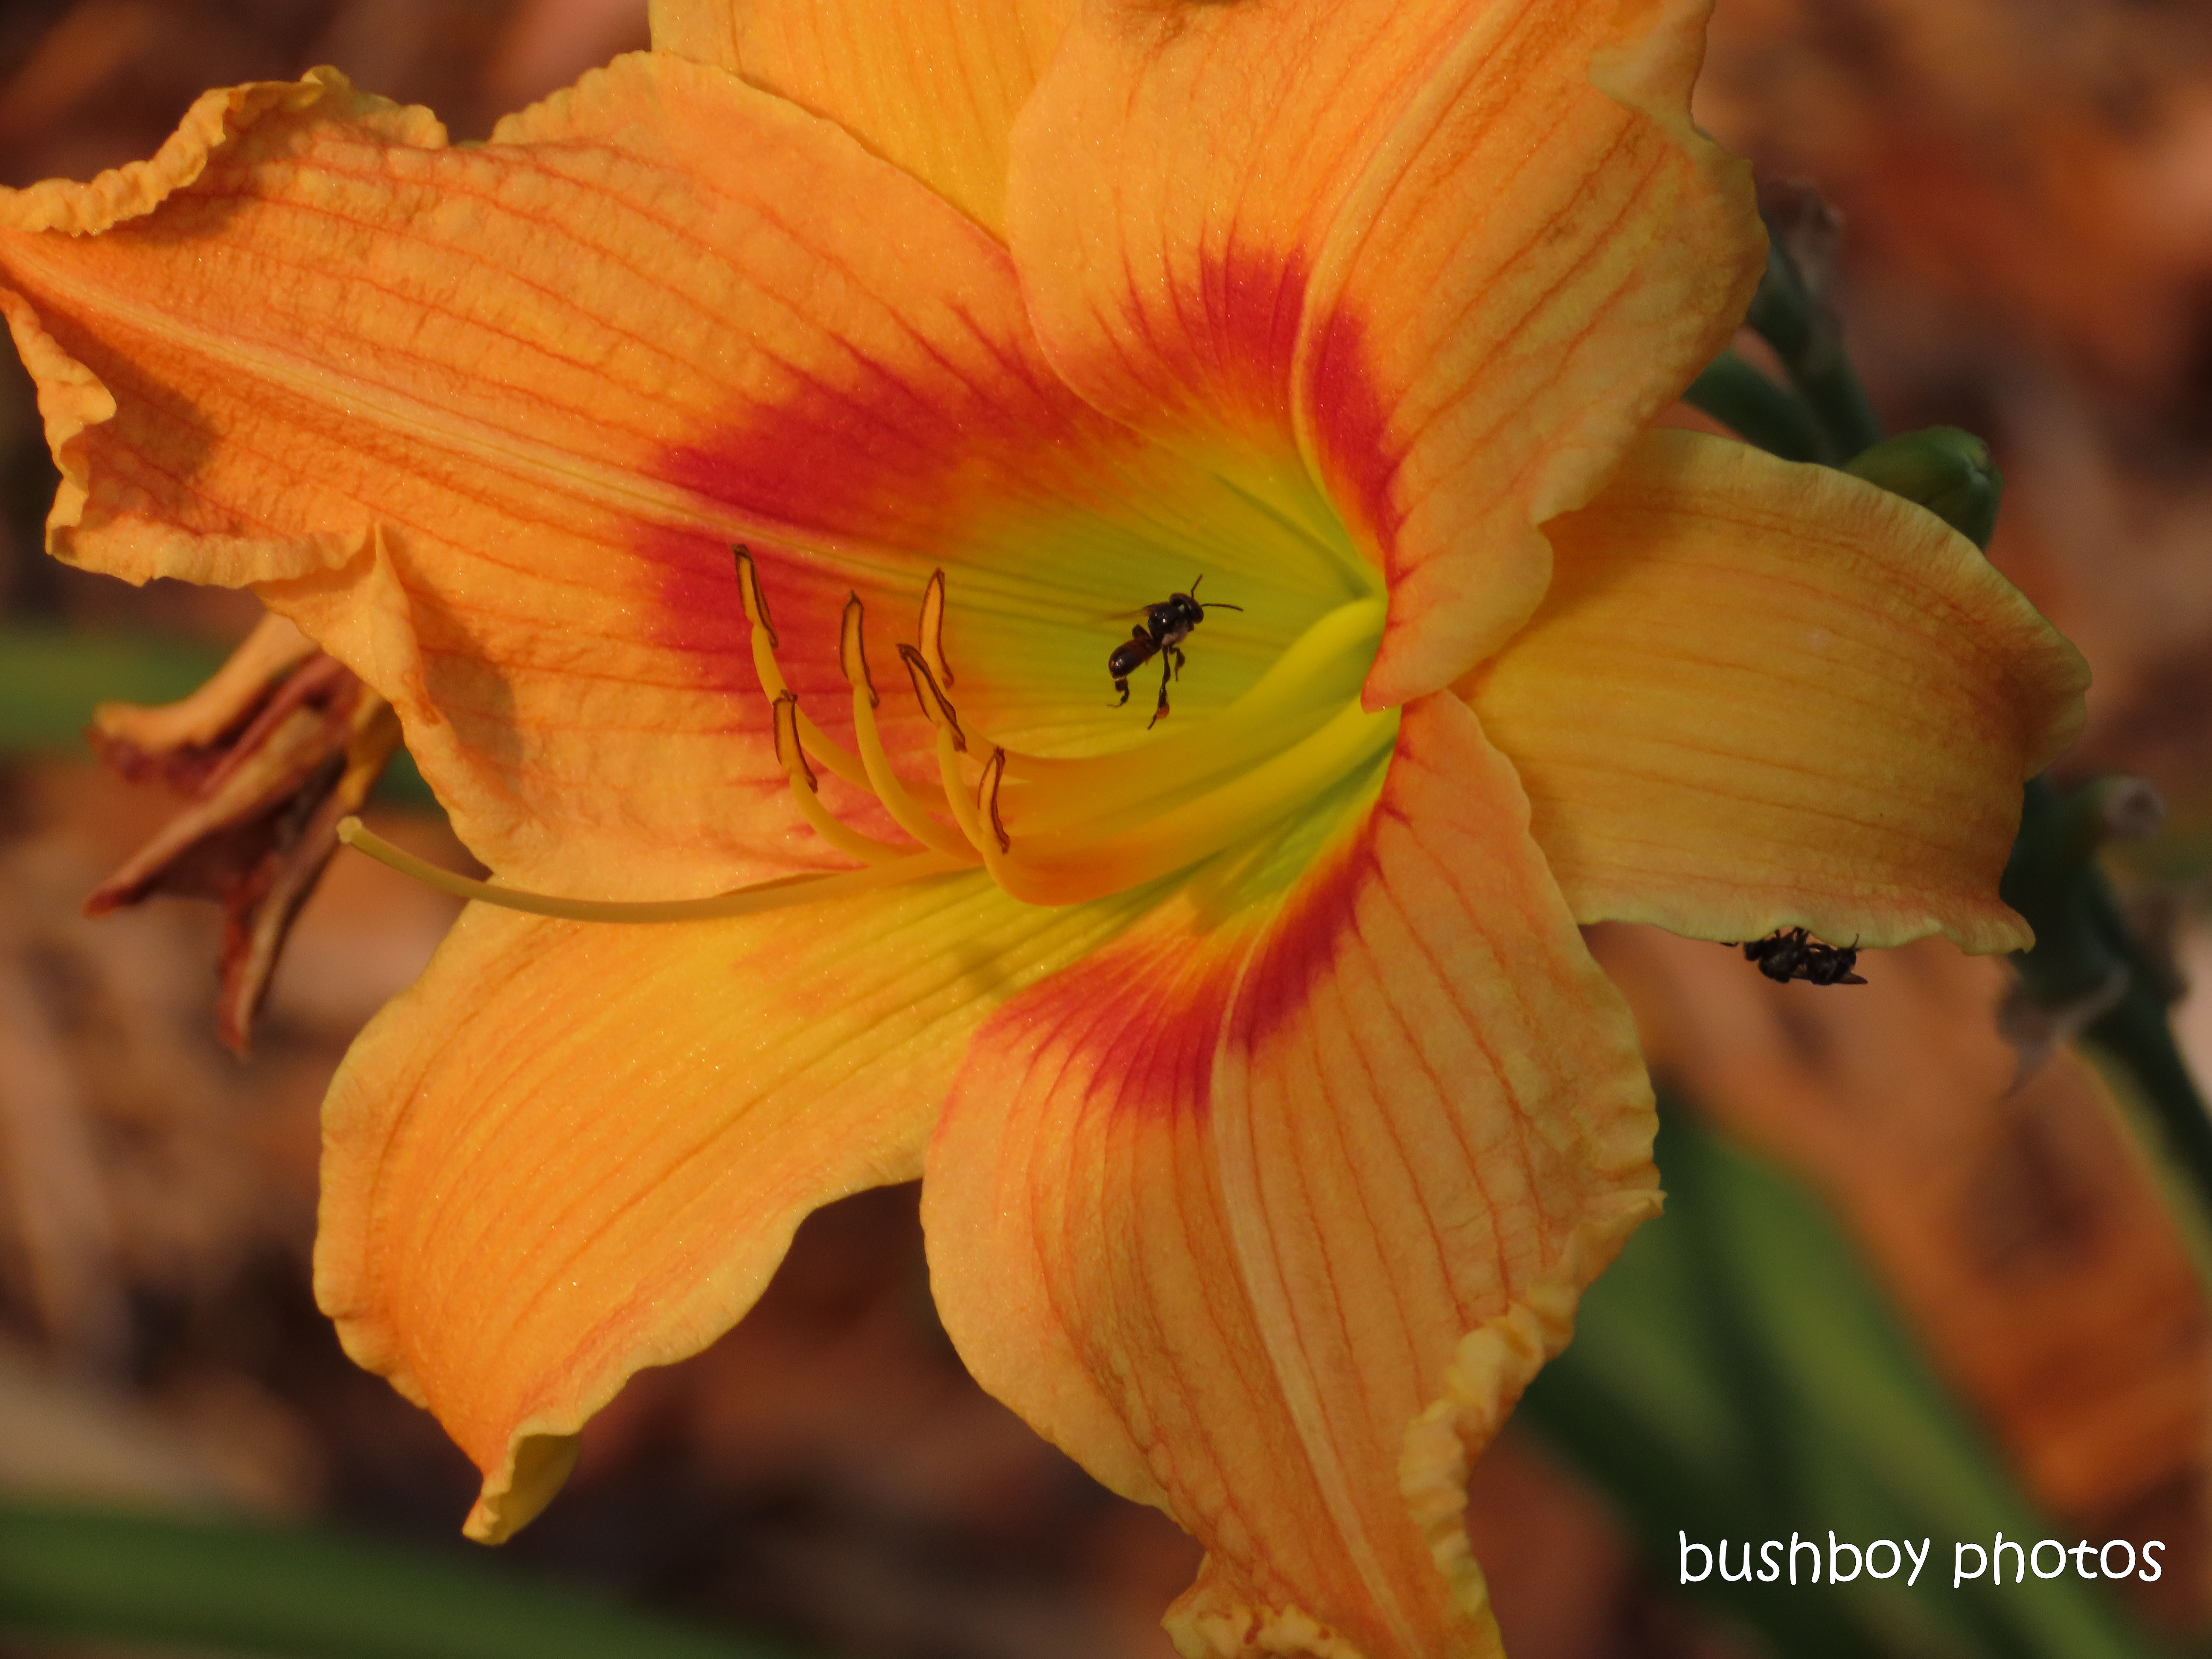 stingless native bee_day lily_orange_named_home_jackadgery_nov 2019